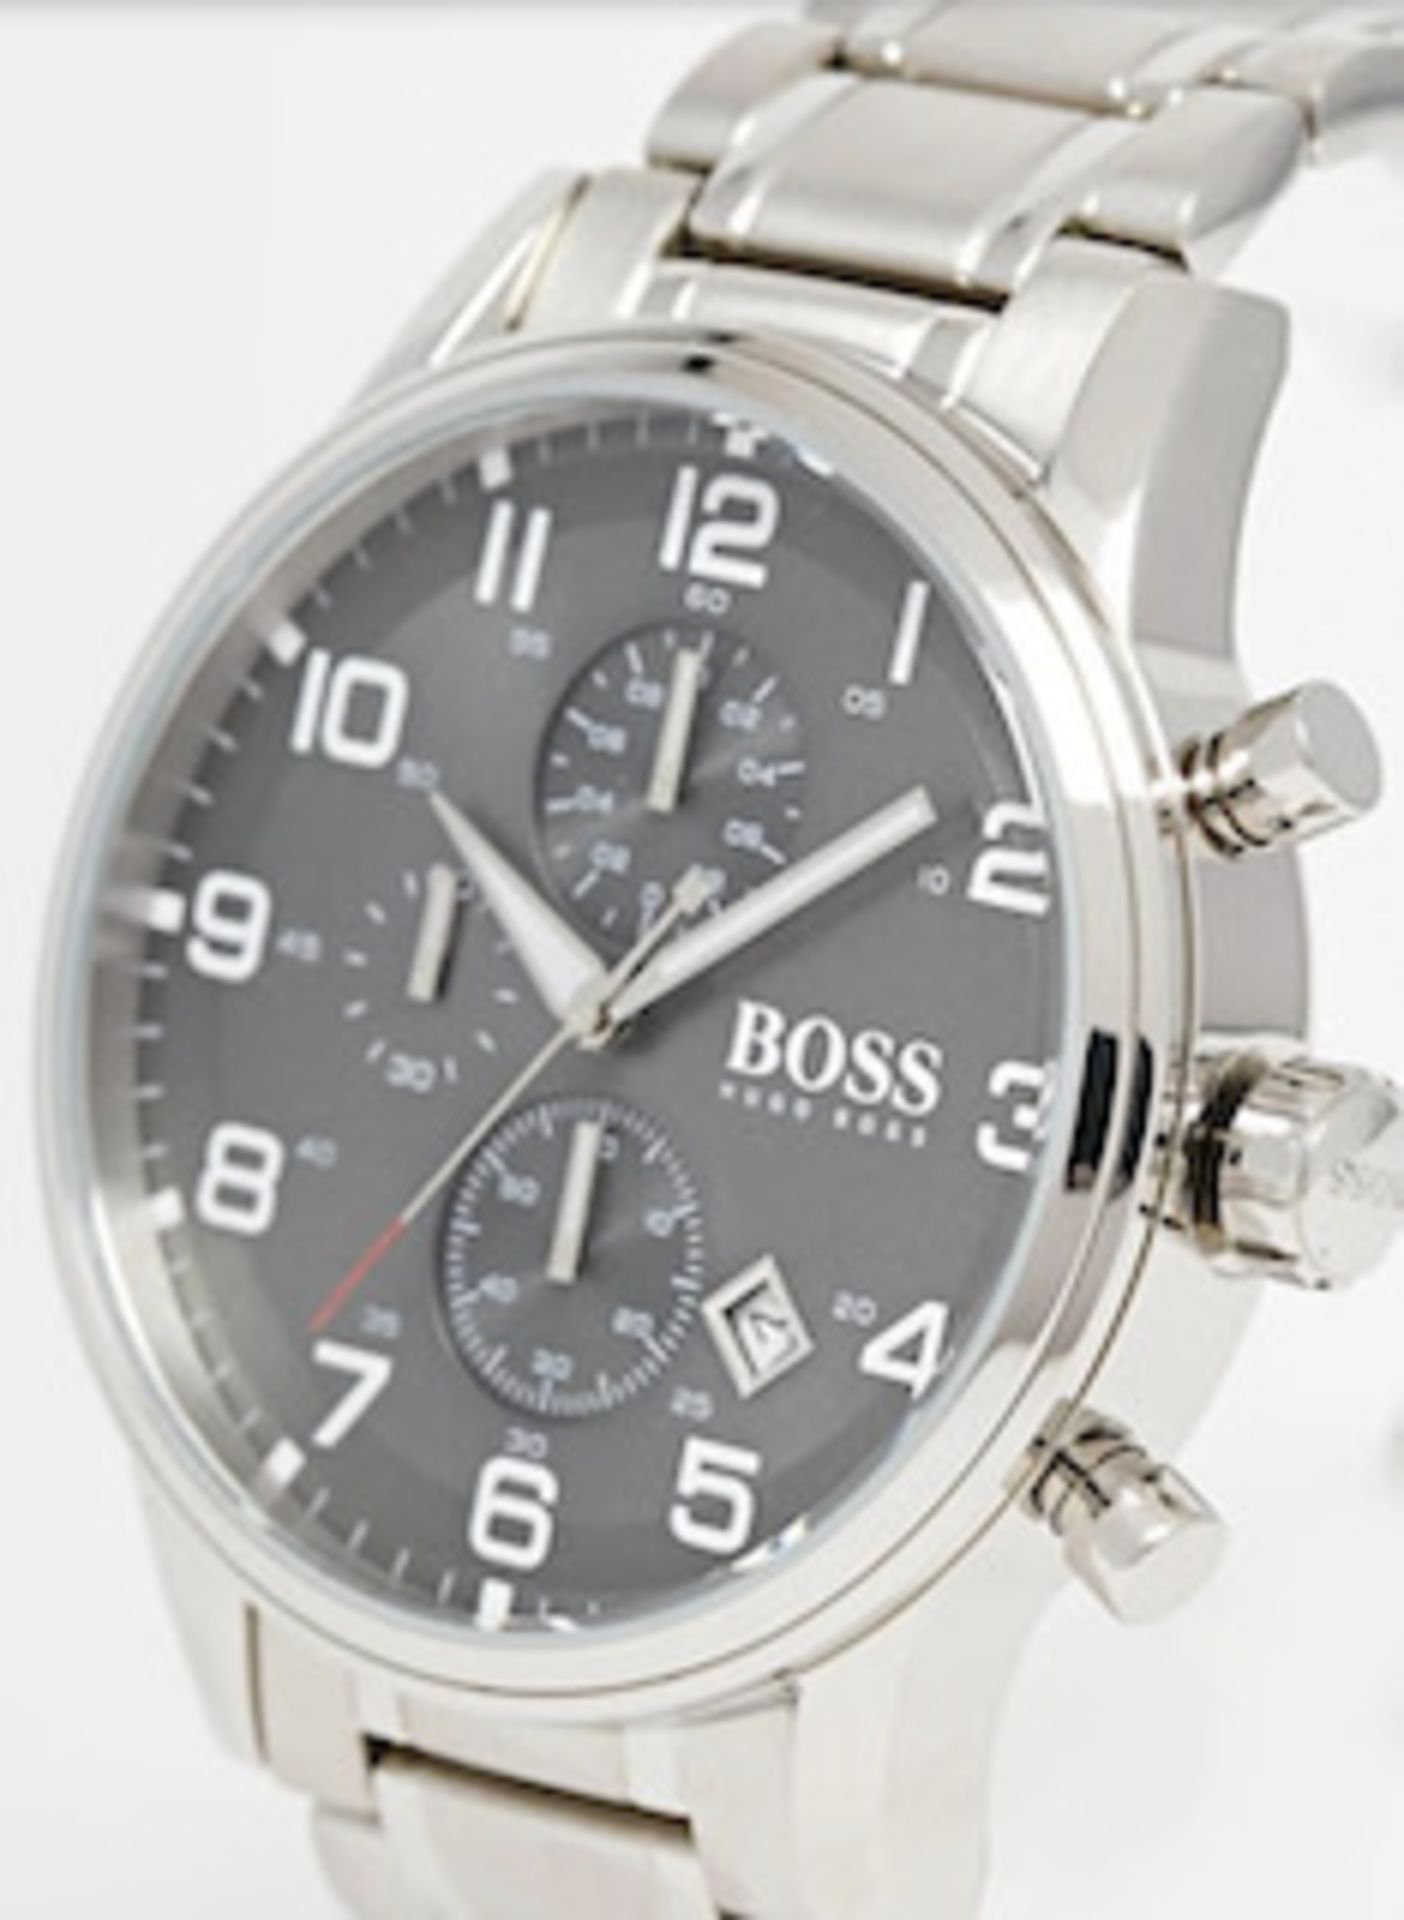 Hugo Boss Men's Black Aeroliner Multi-Functional Chronograph Watch 1513181 - Image 3 of 5